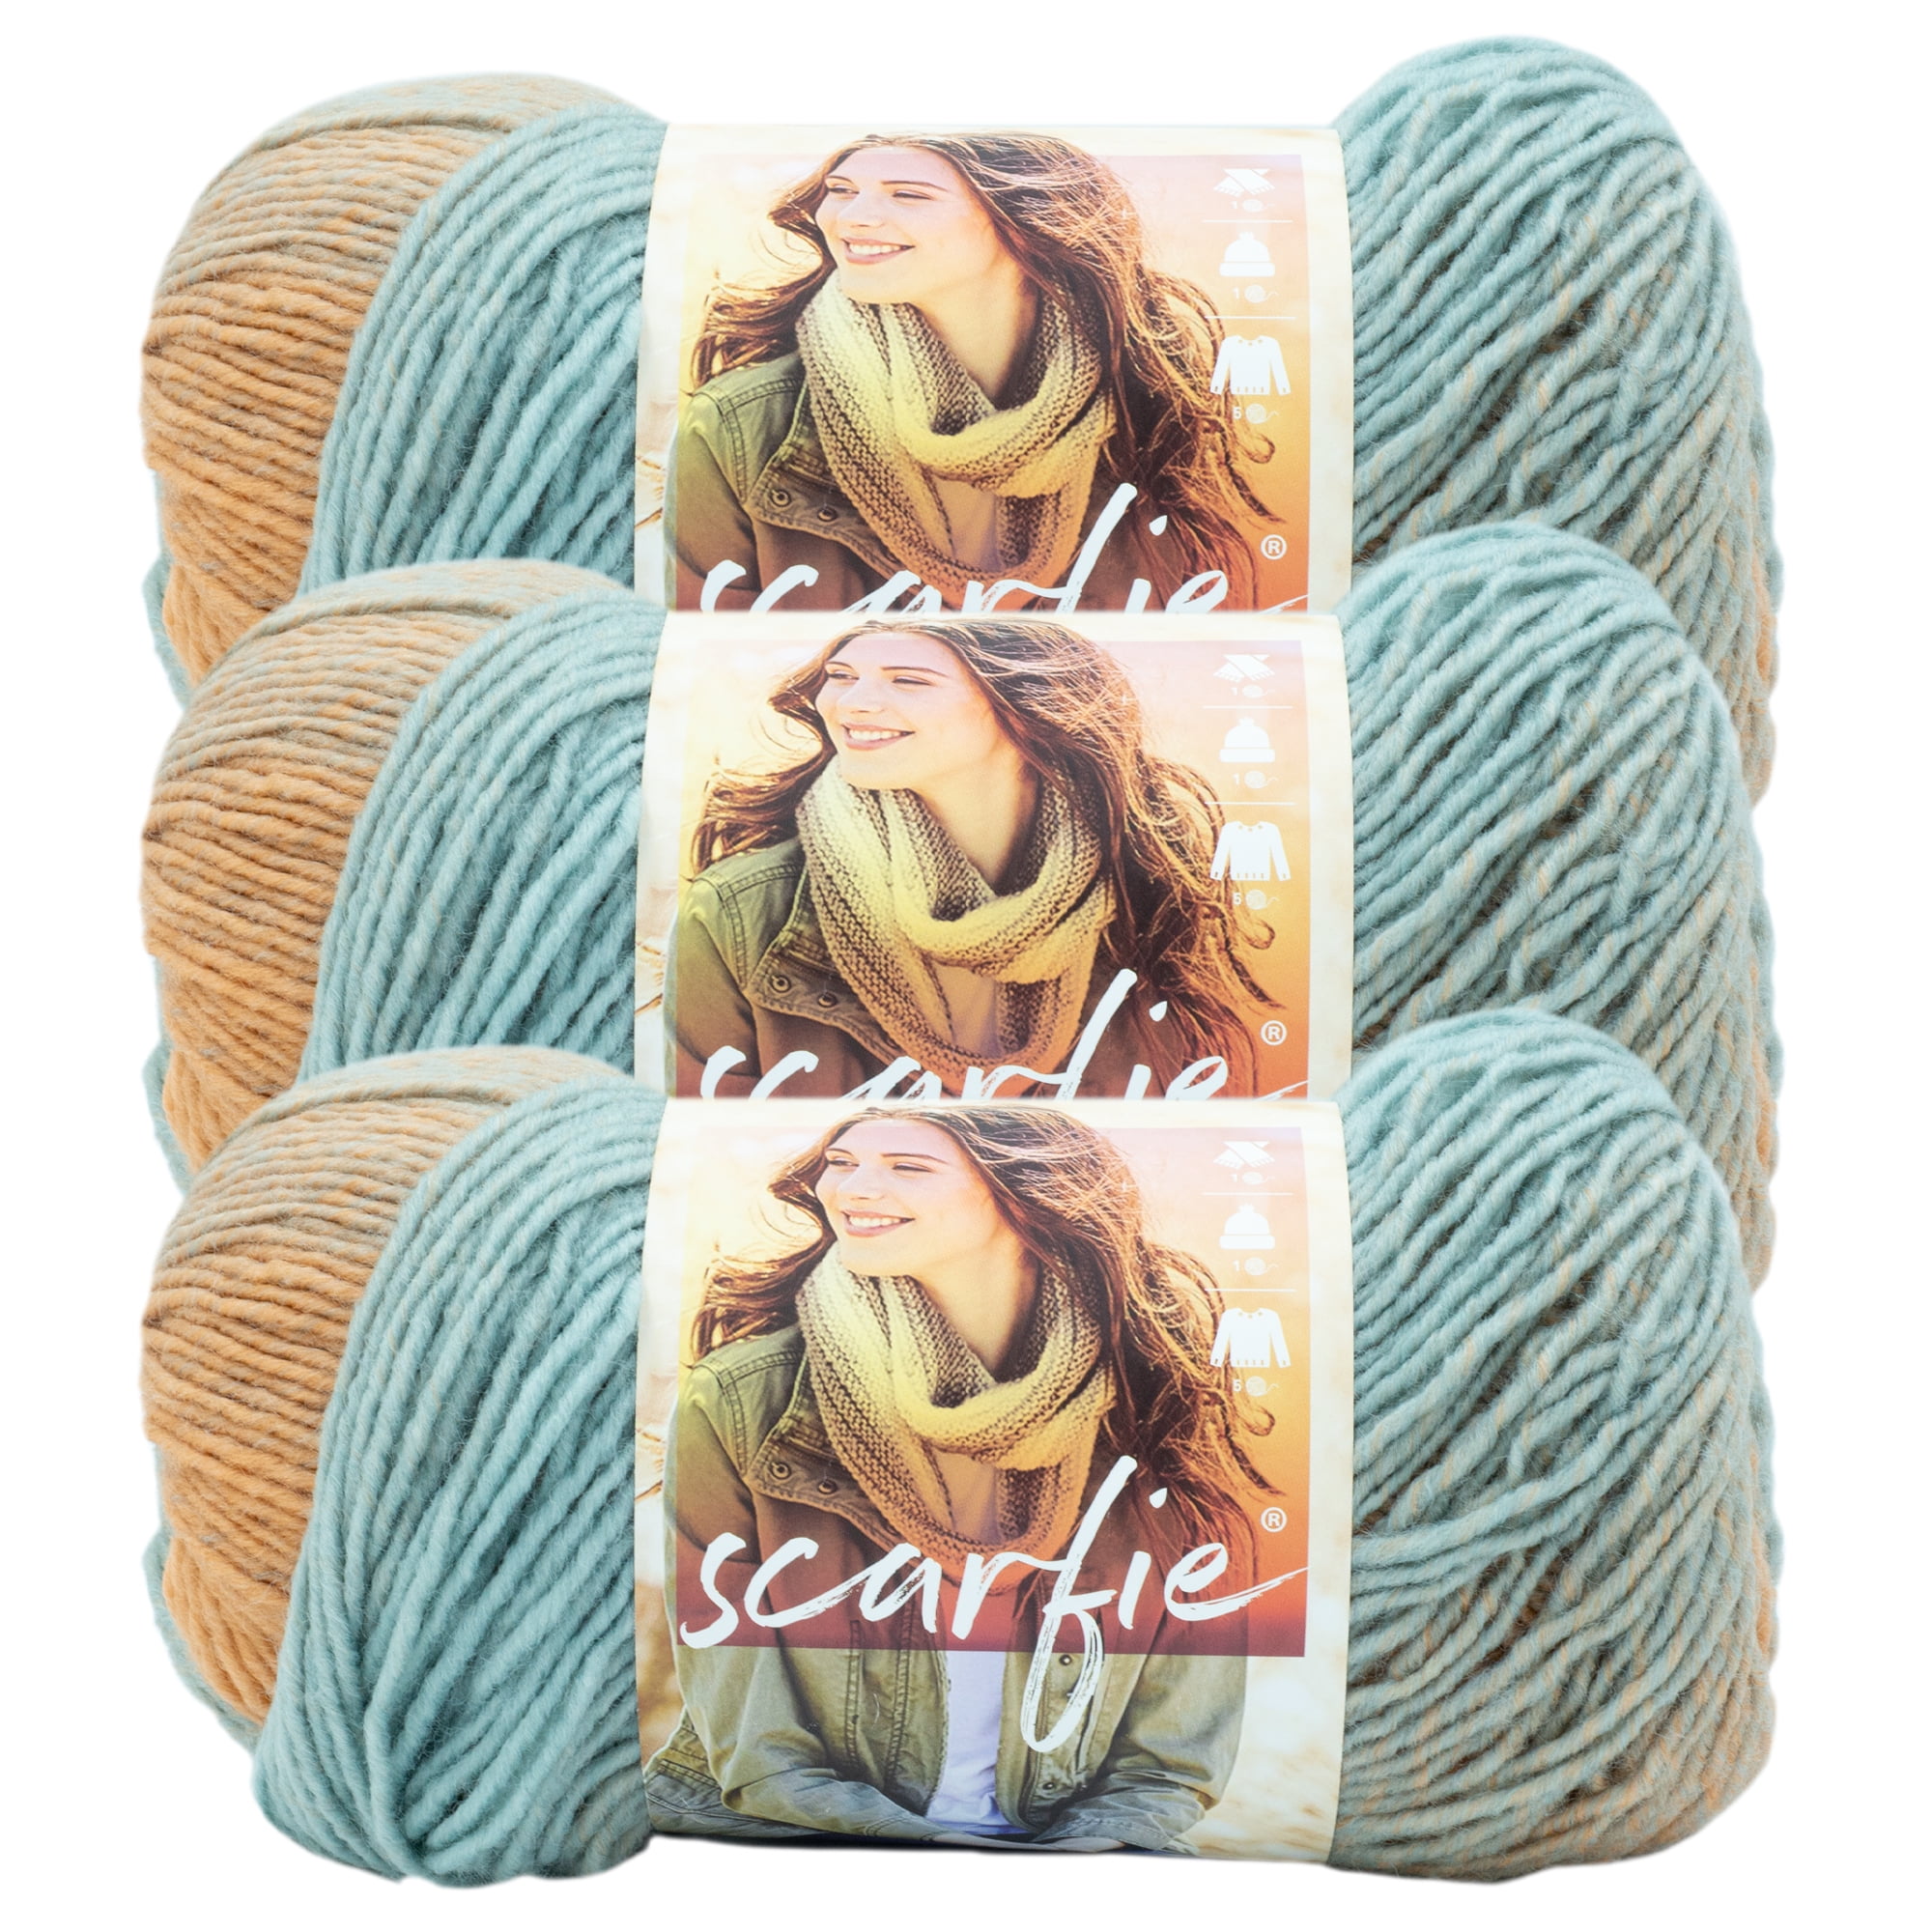 Lion Brand Yarn Scarfie Cream/Black Scarf Bulky Acrylic, Wool Multi-color  Yarn 3 Pack 